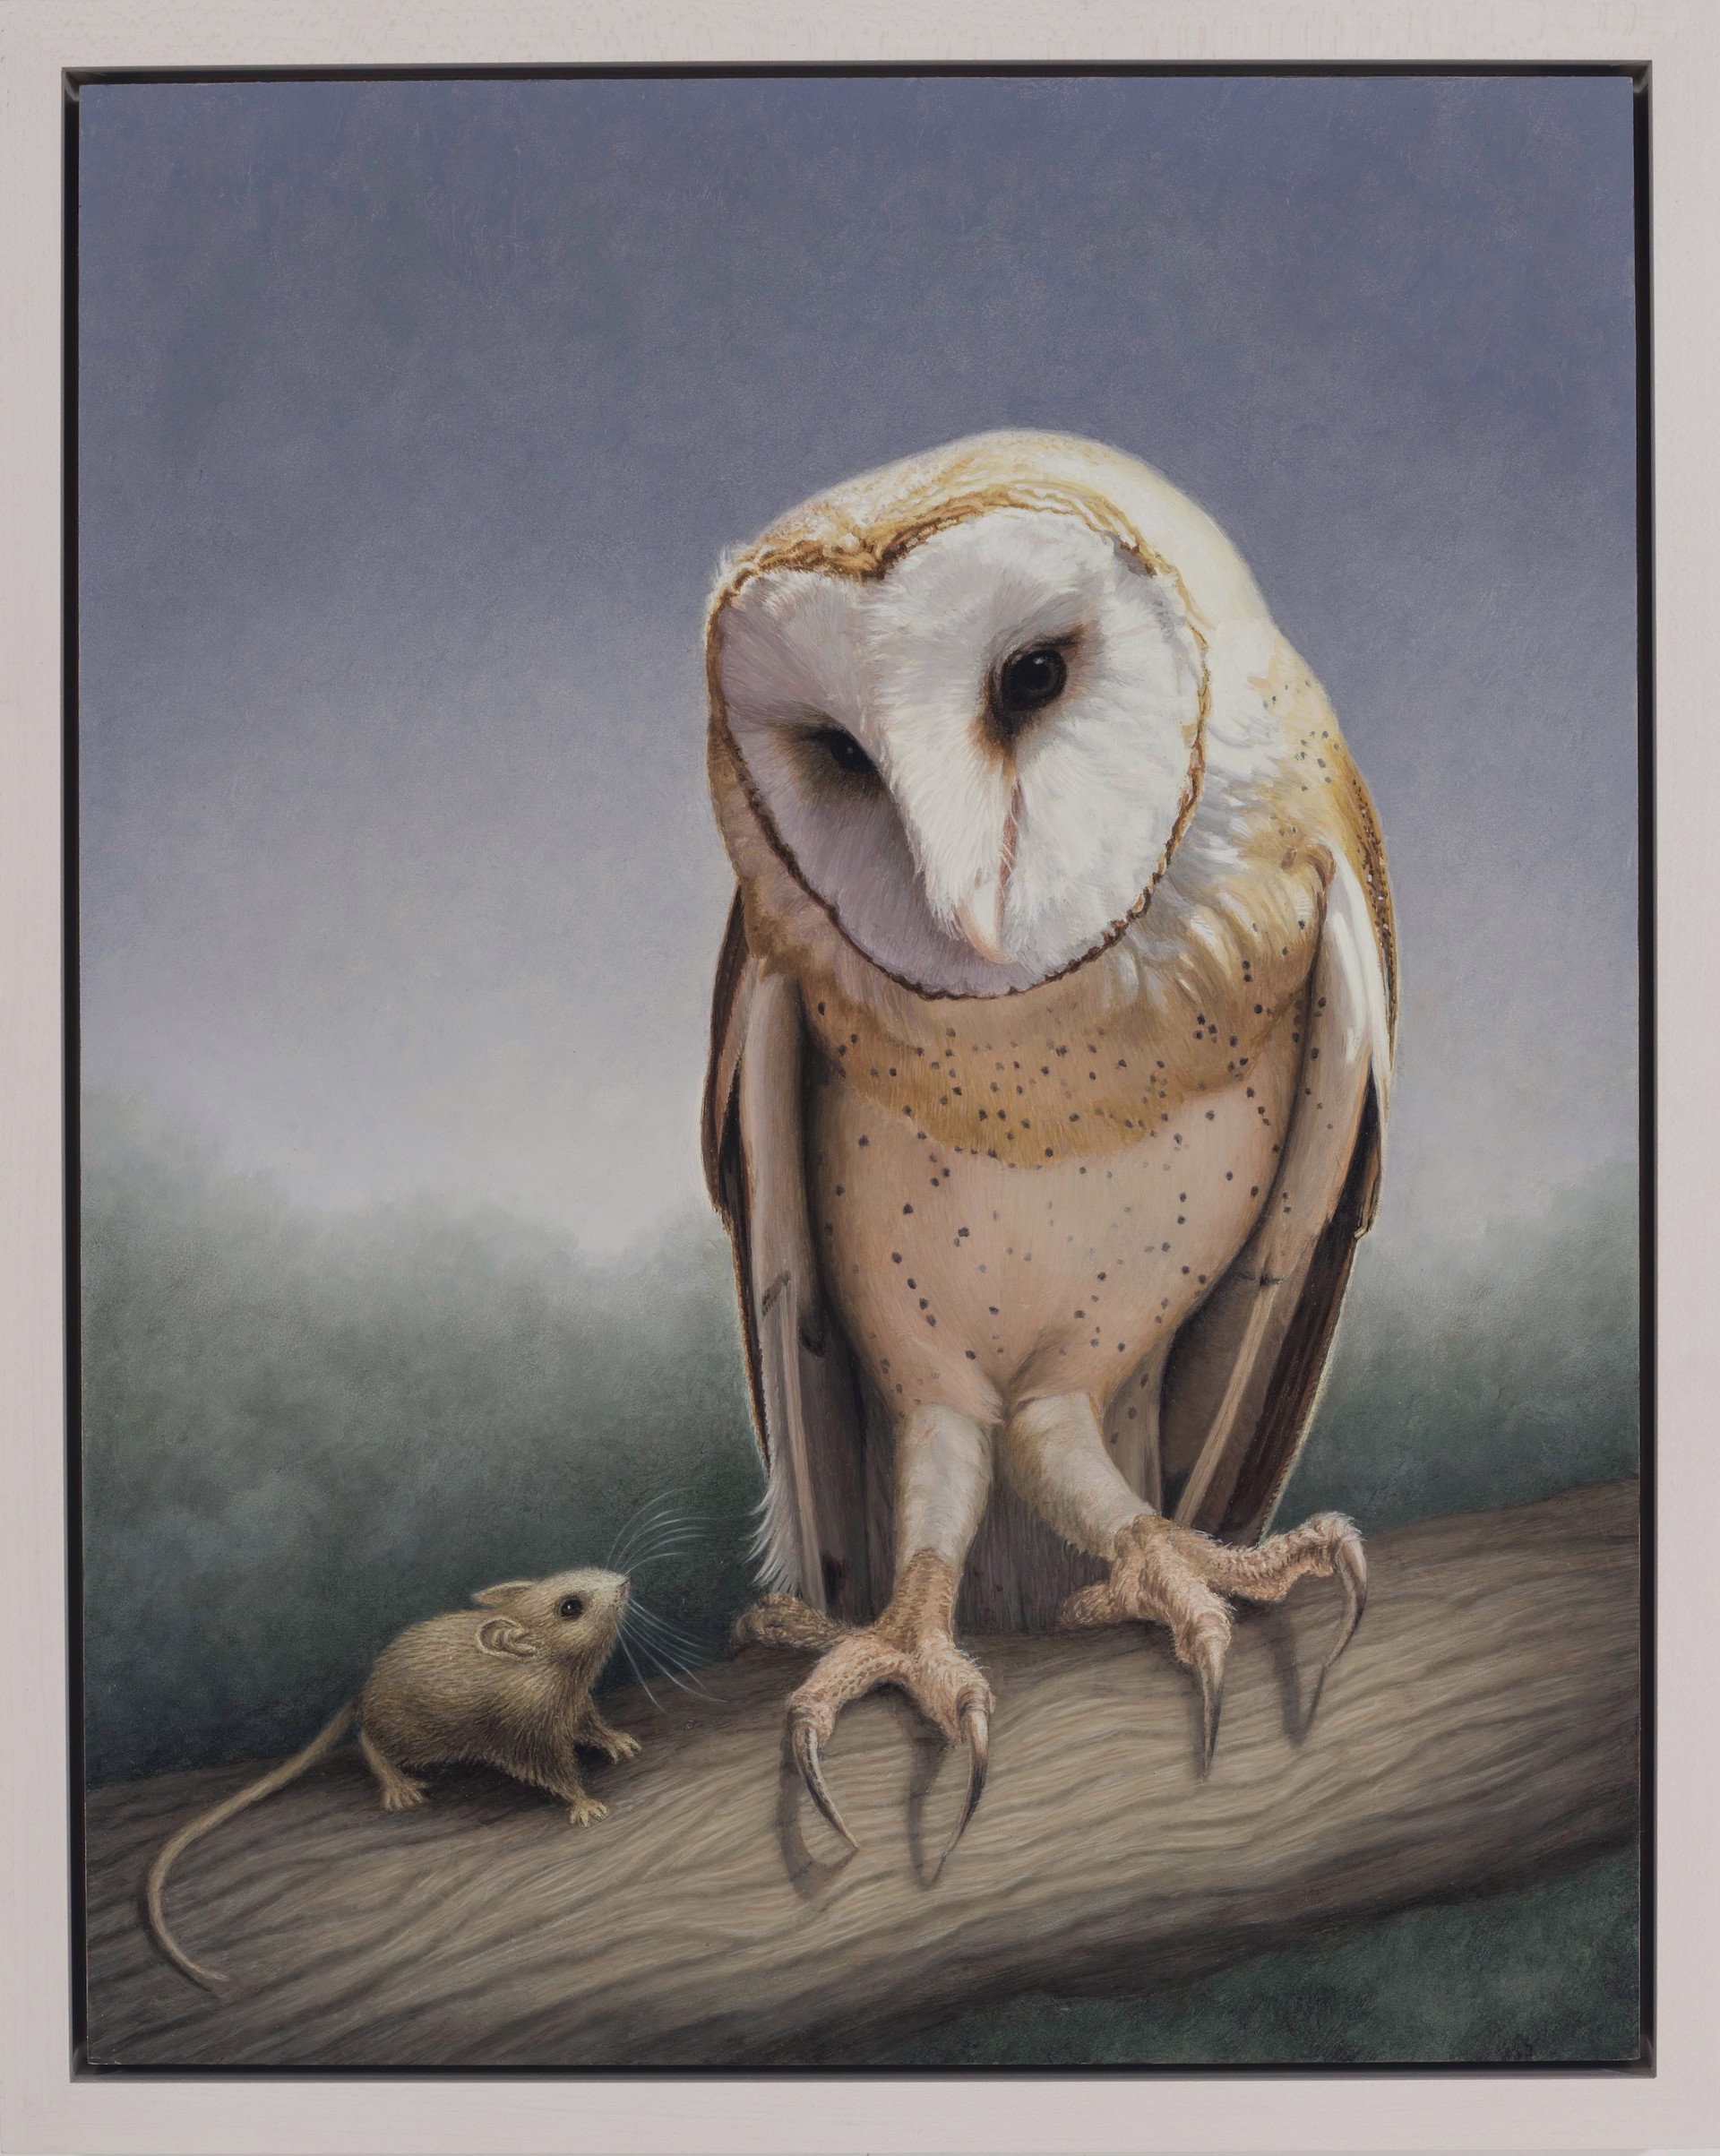 Benevolent Owl by Susan McDonnell